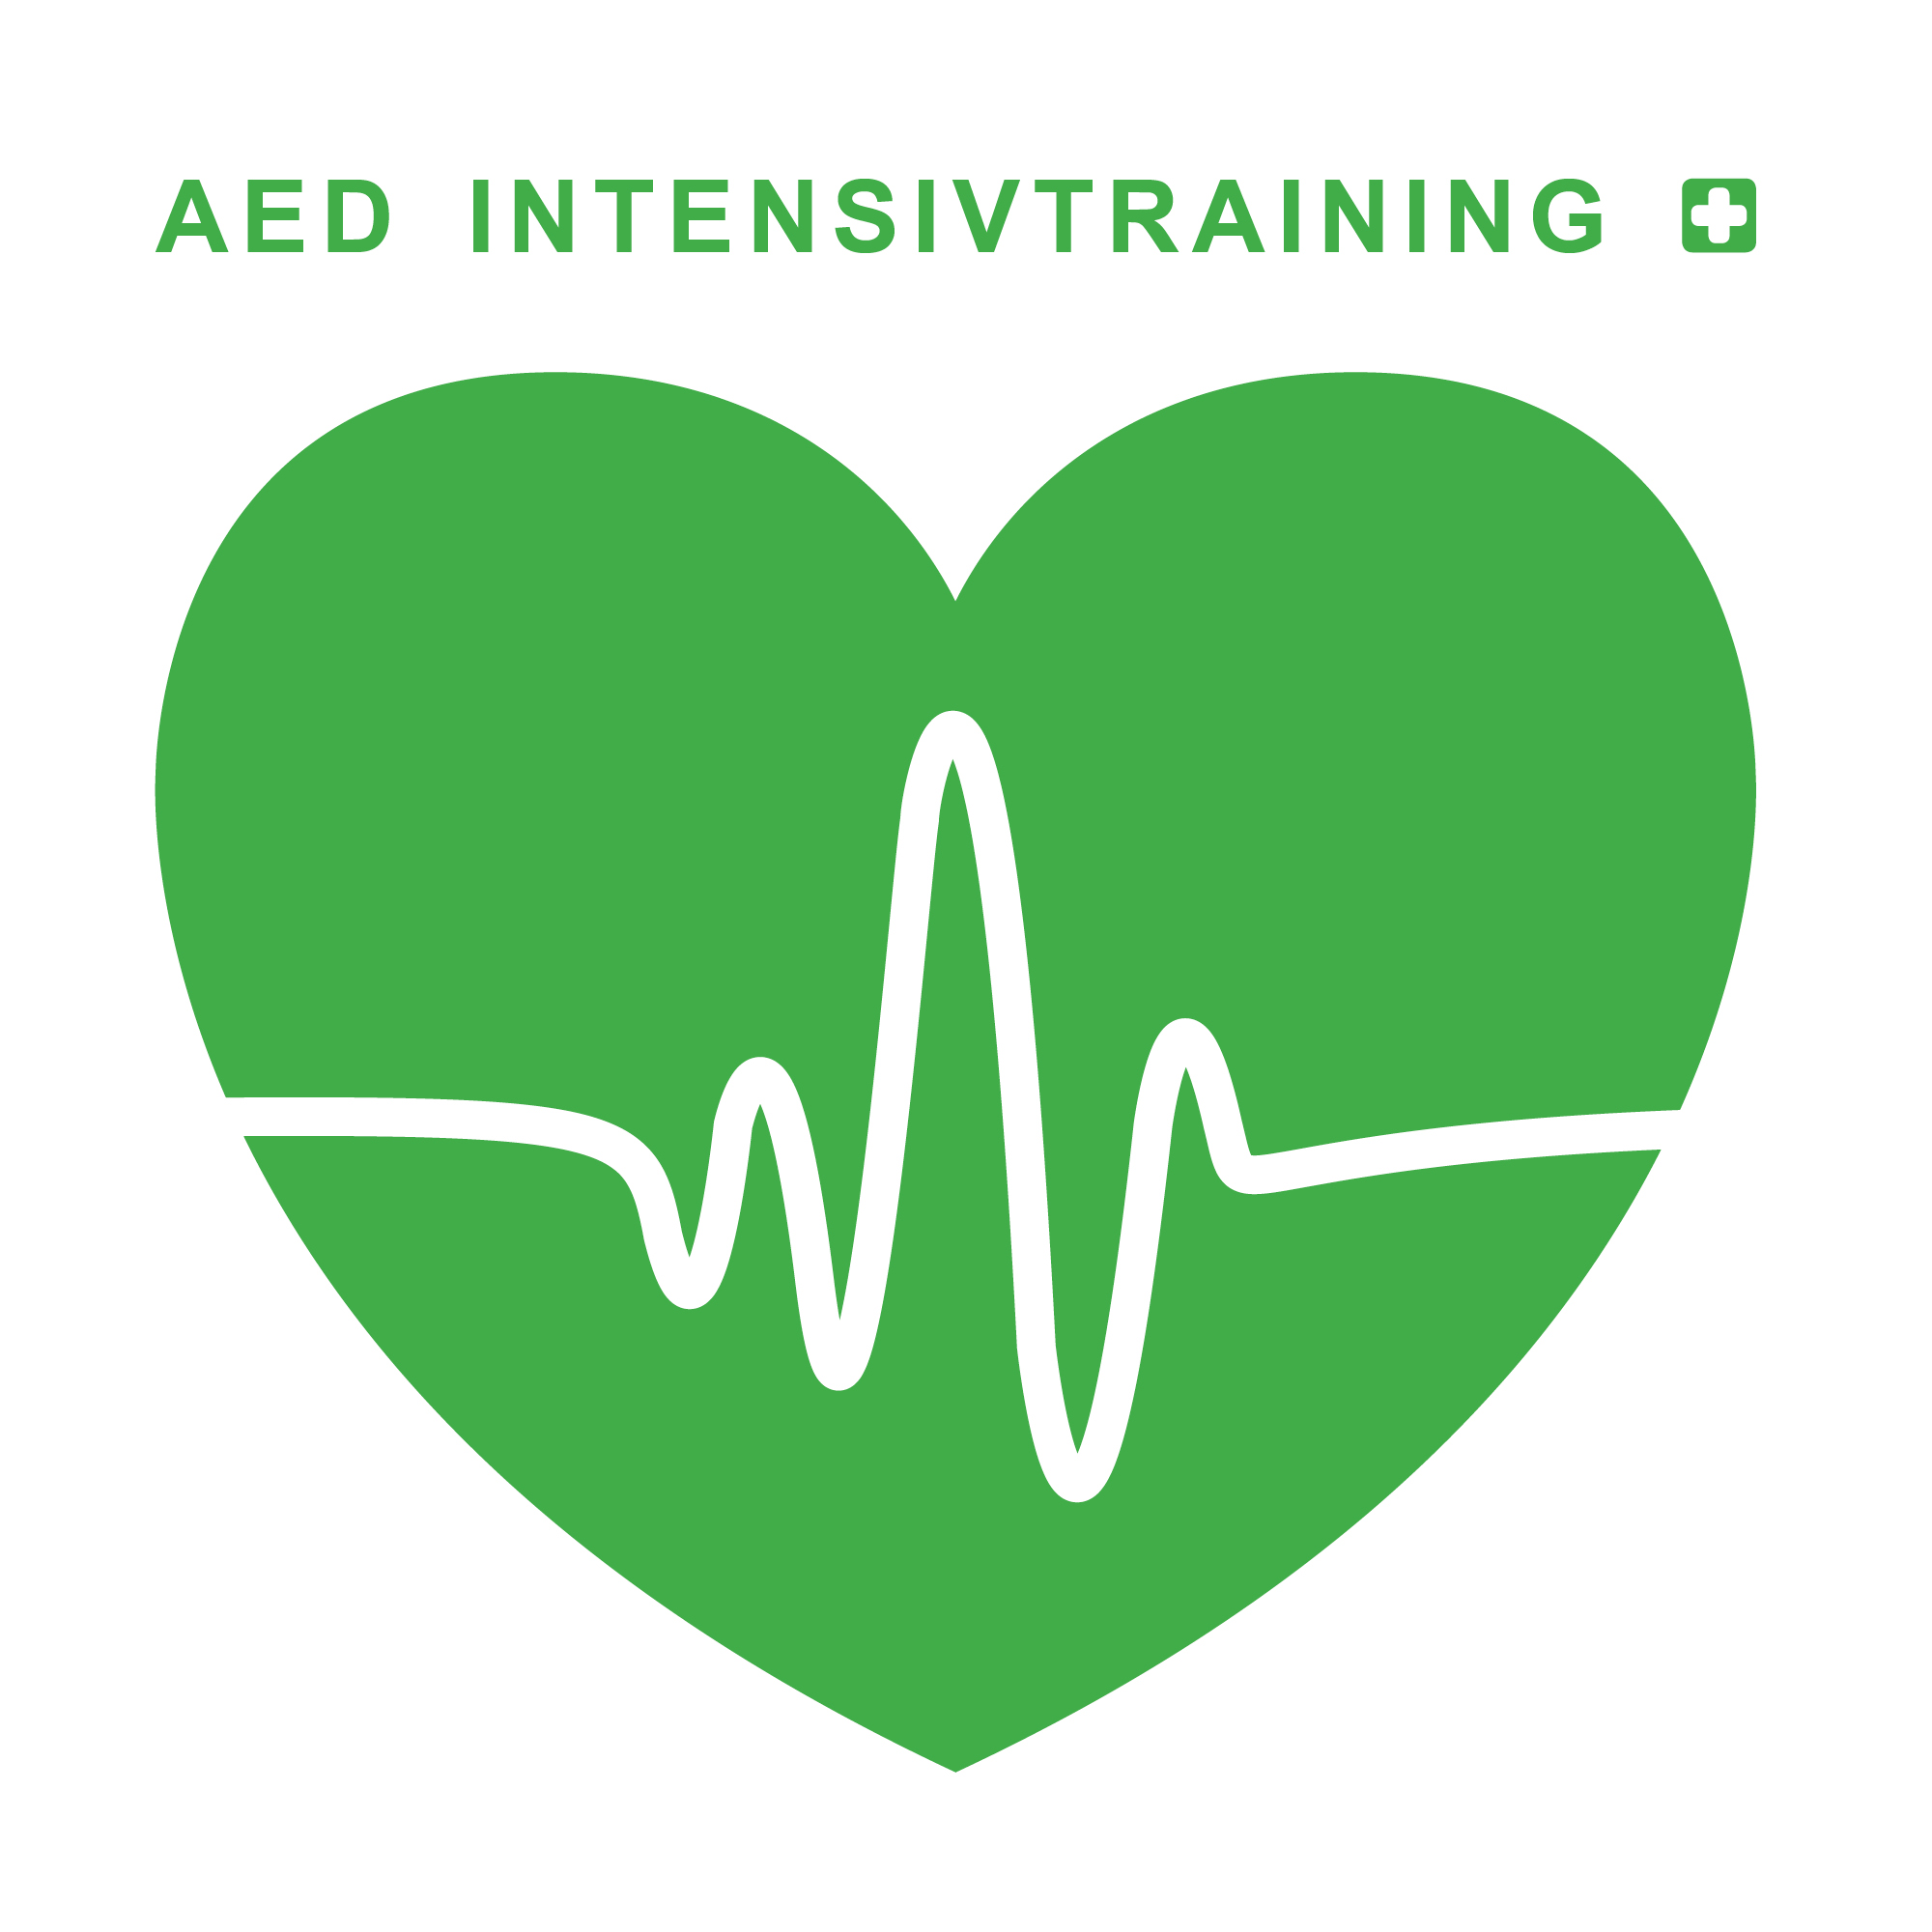 AED Intensivtraining